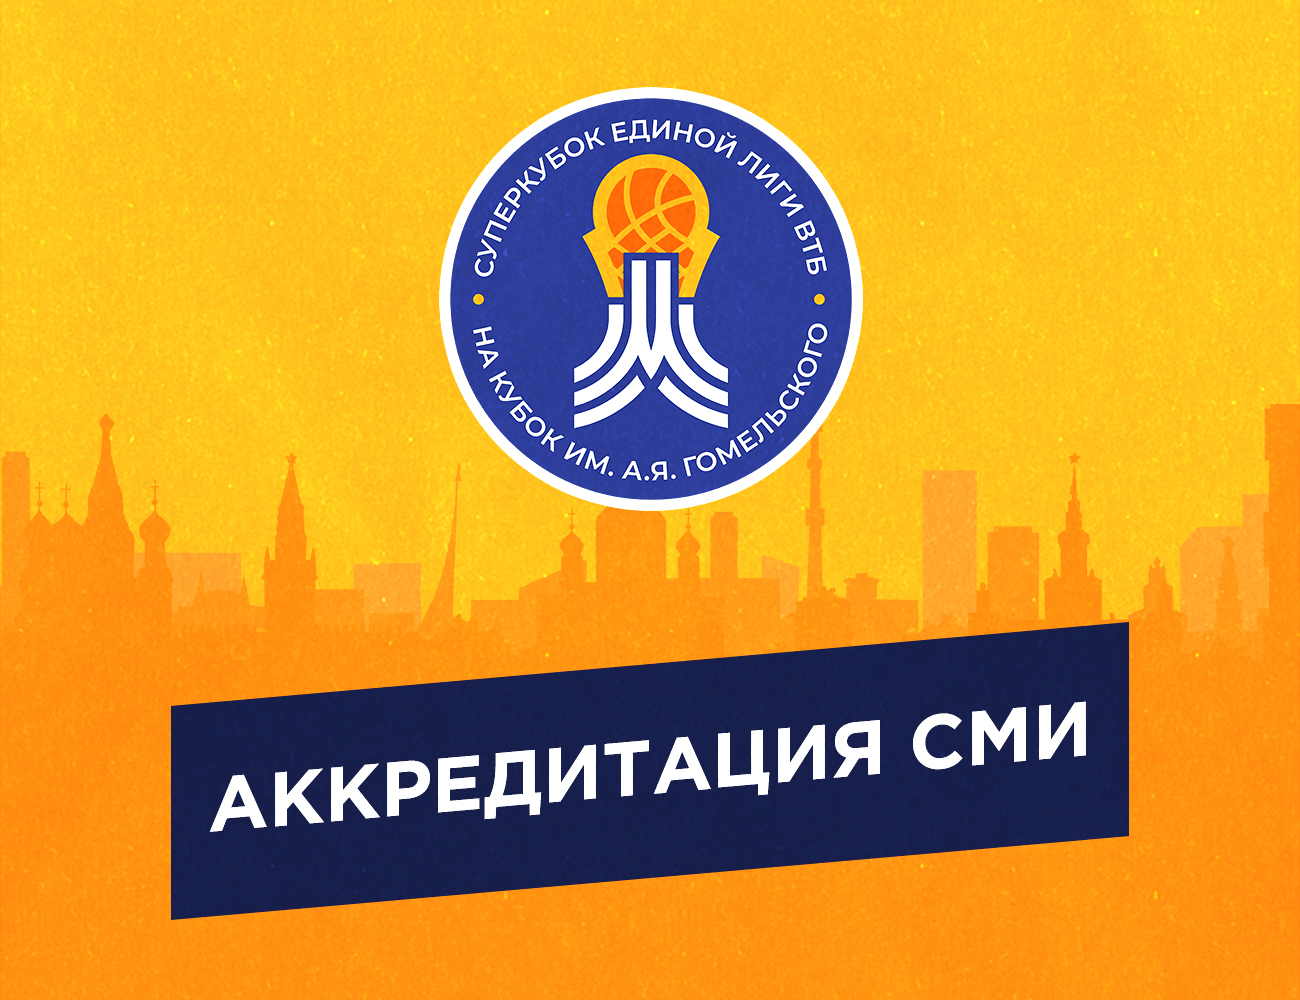 Вниманию СМИ! Открыта аккредитация на Суперкубок-2021